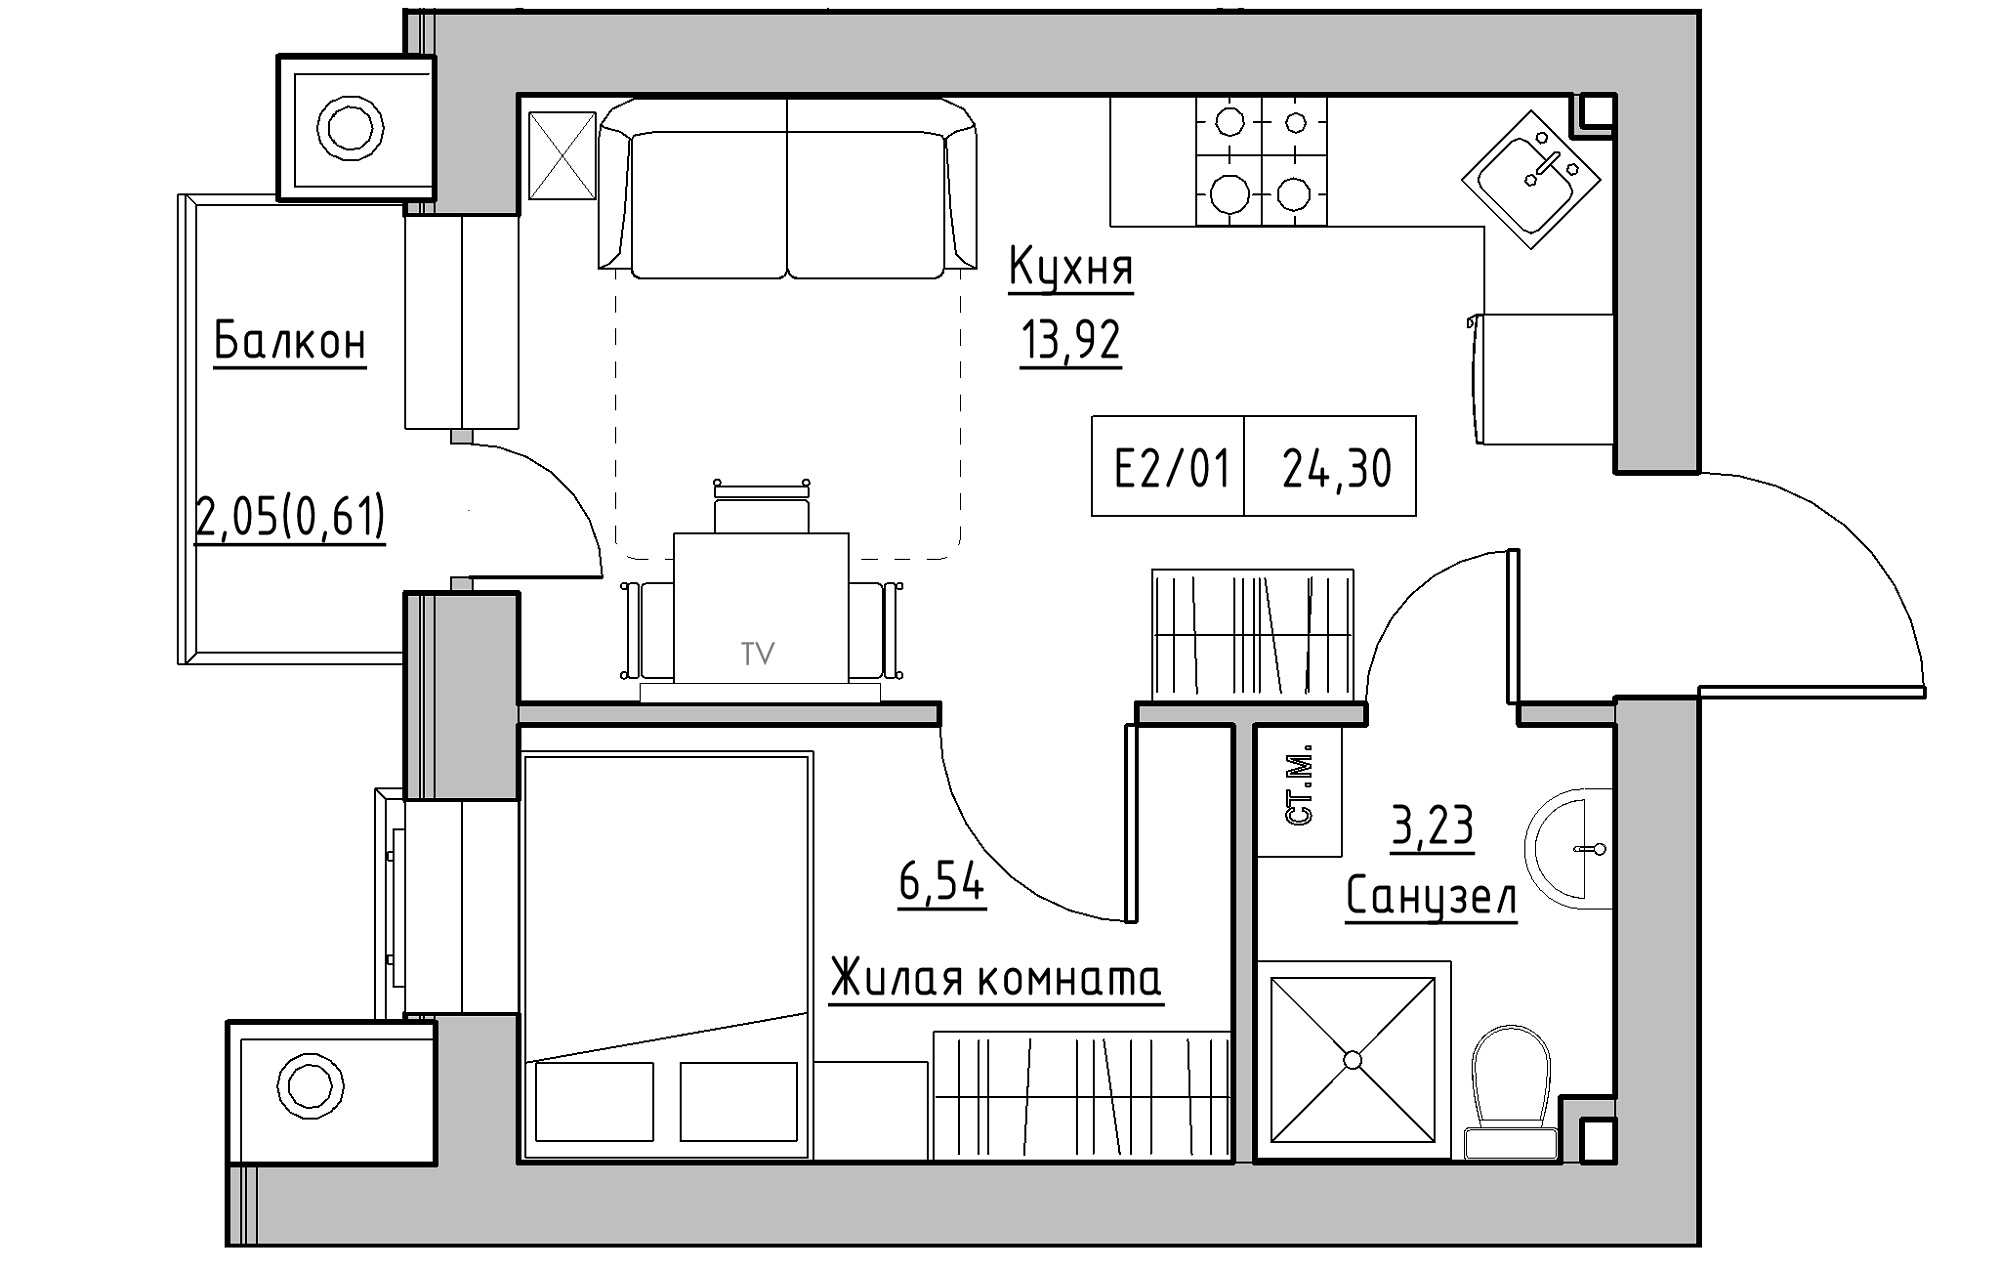 Planning 1-rm flats area 24.3m2, KS-013-02/0005.